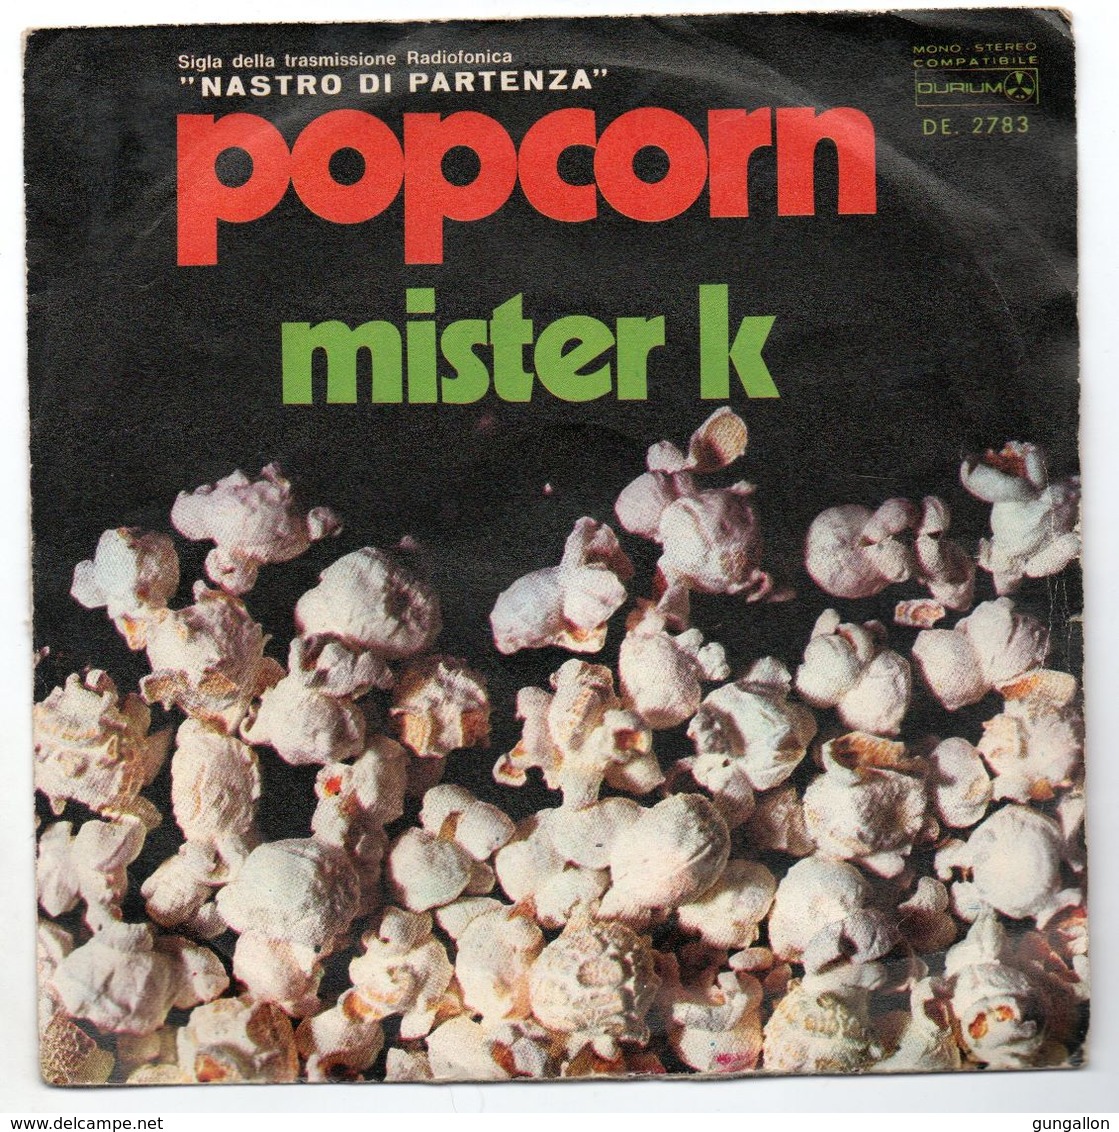 Mister K (1972)  "Pop Corn  - Synthetic Sister N. 1" - Instrumental